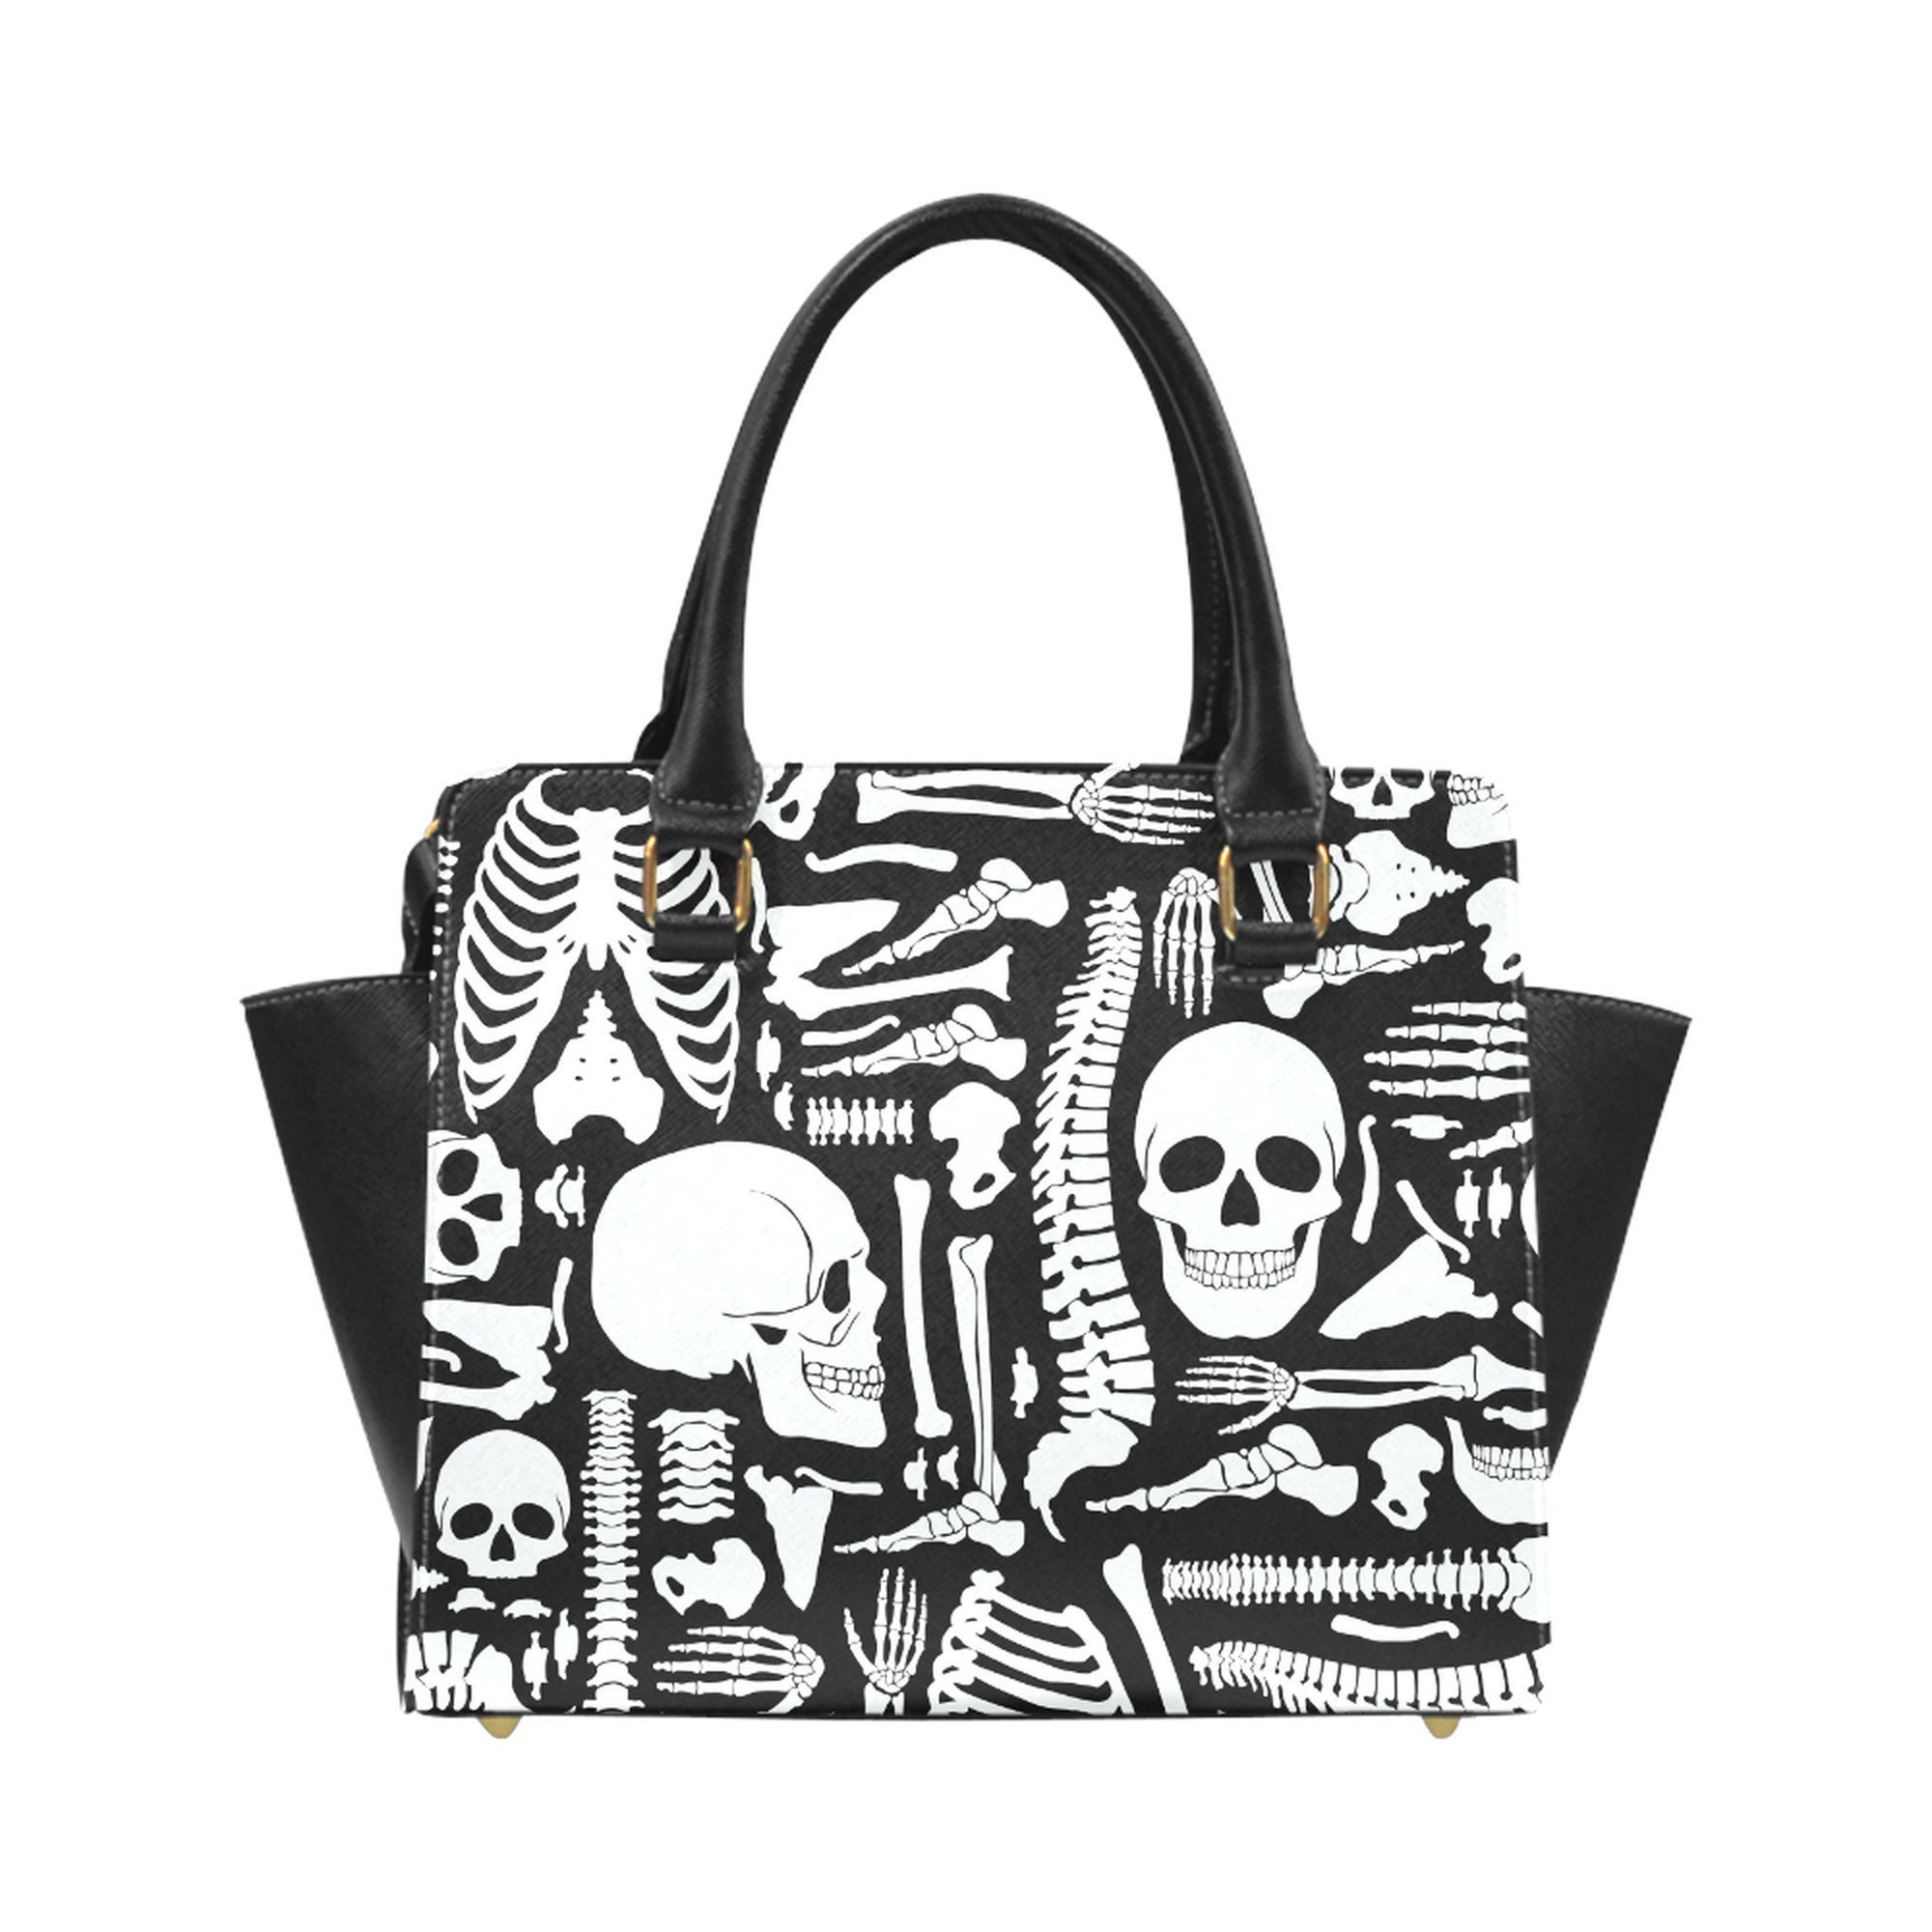 Buy Women Skull Handbag Tote Purse Large Capacity Gothic Shoulder Bag with  Strap Studded Doctor Handbag, Black at